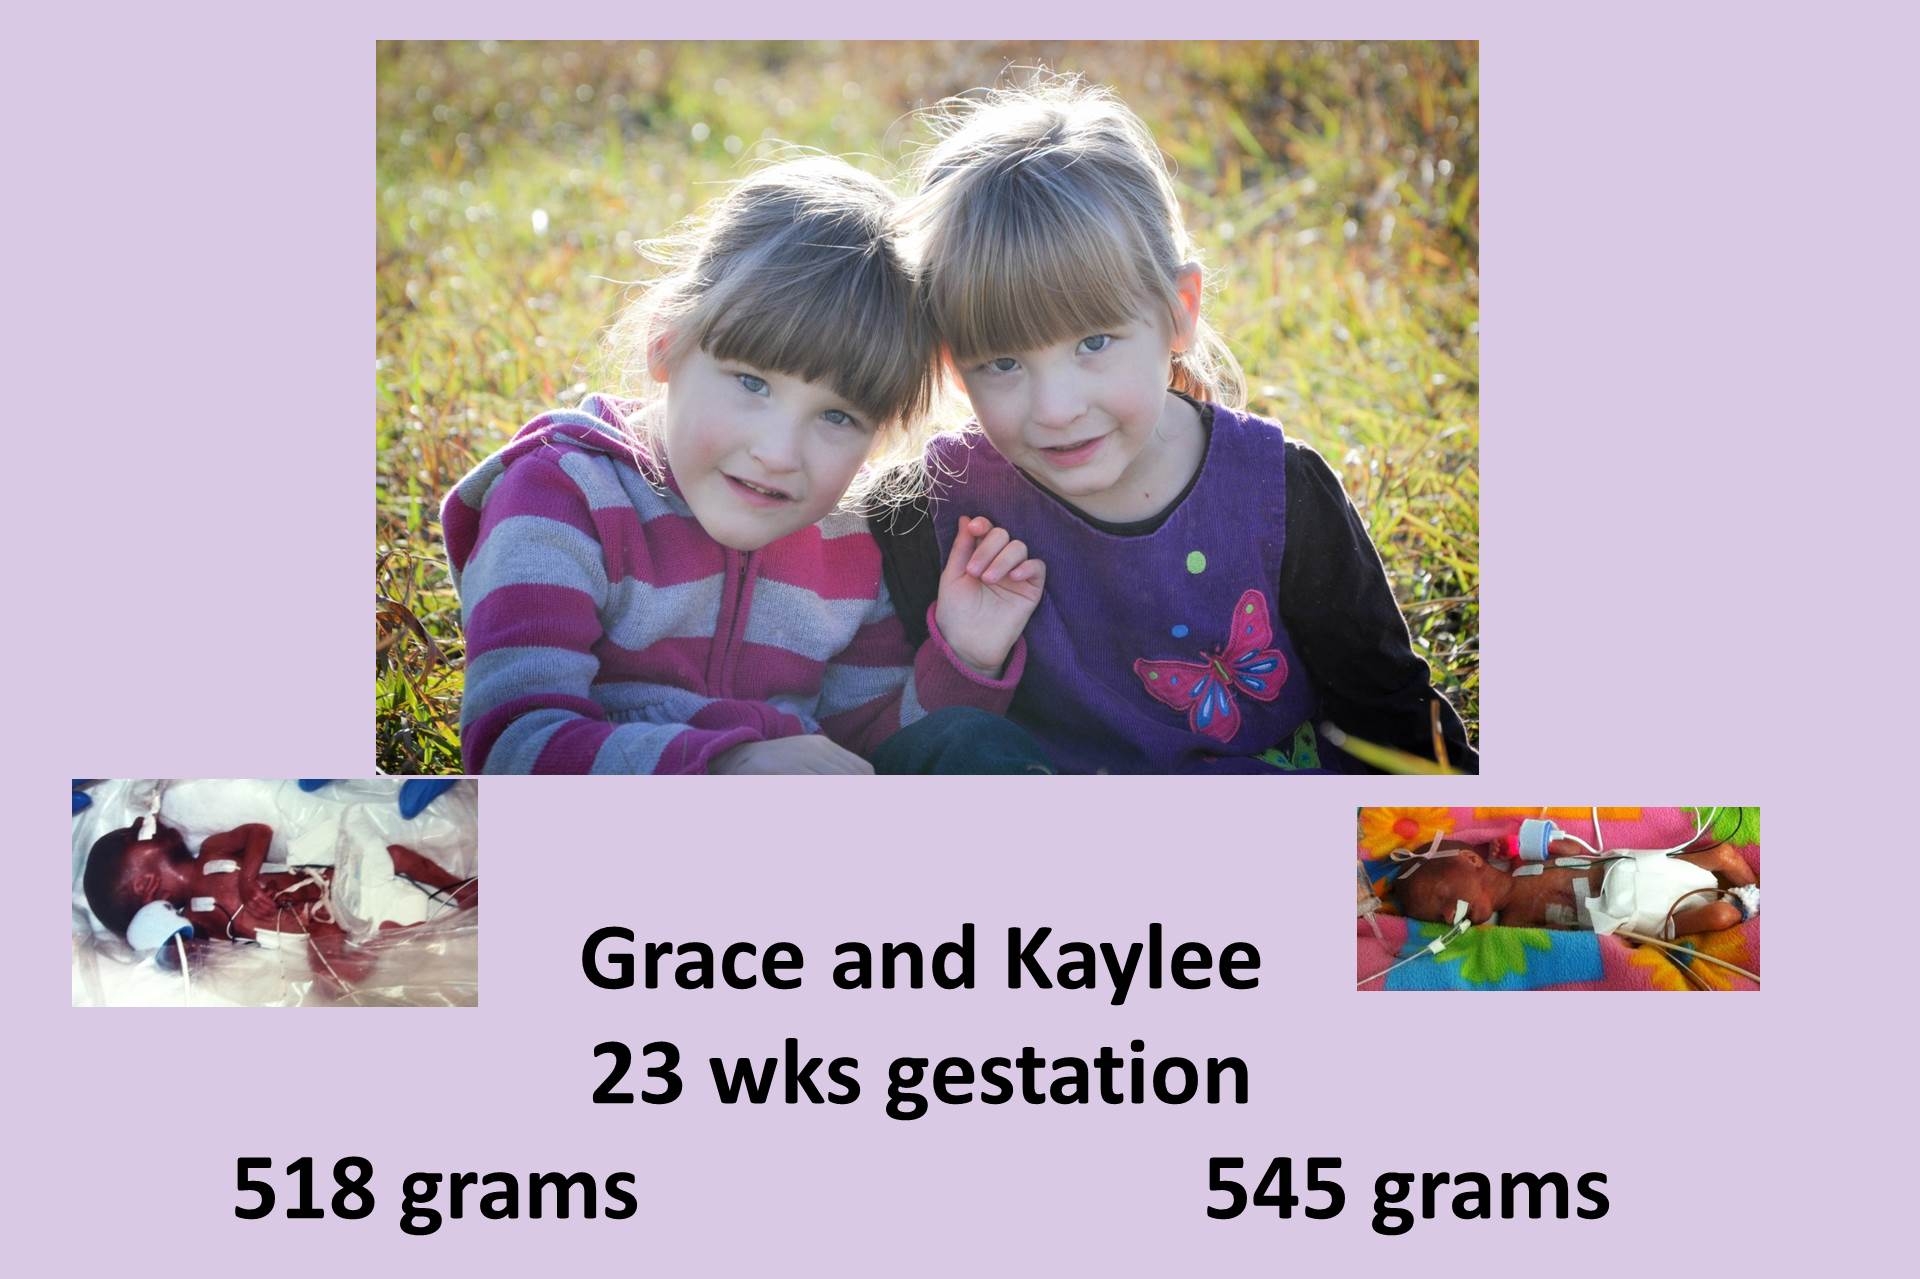 Hallway of Hope: Grace and Kaylee